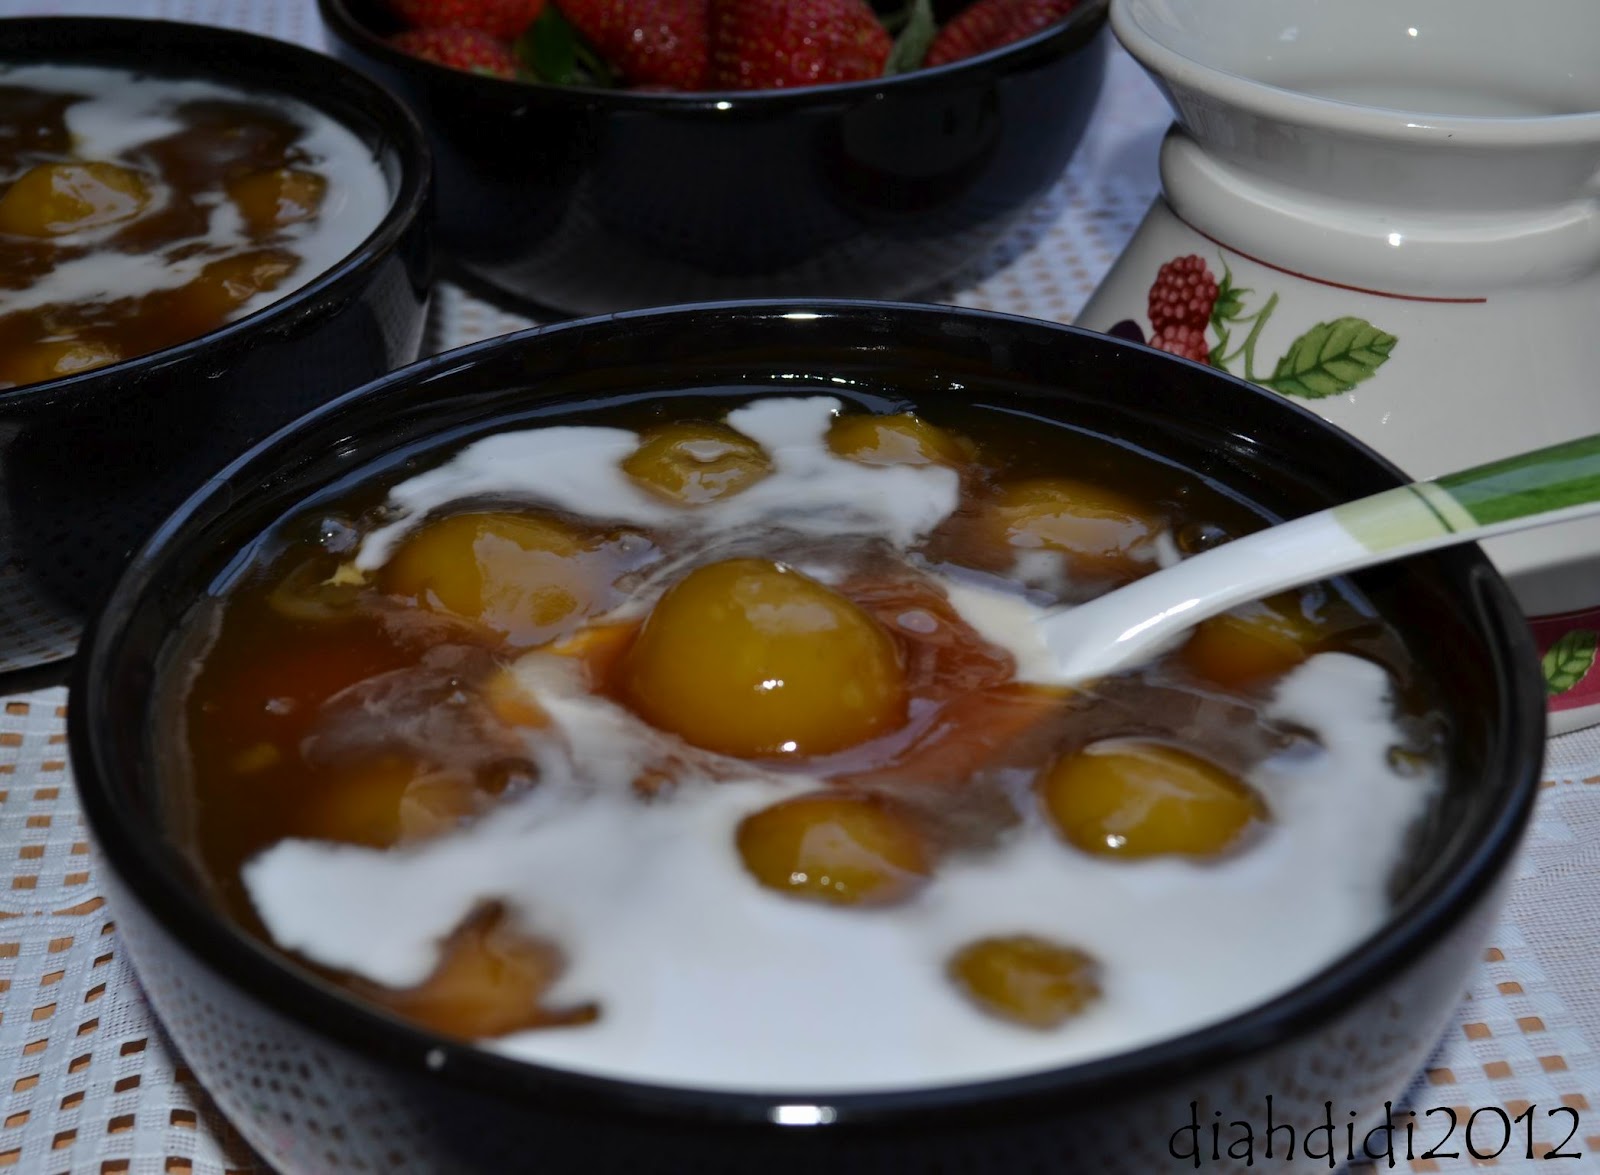 Diah Didi's Kitchen: Bubur candil ubi